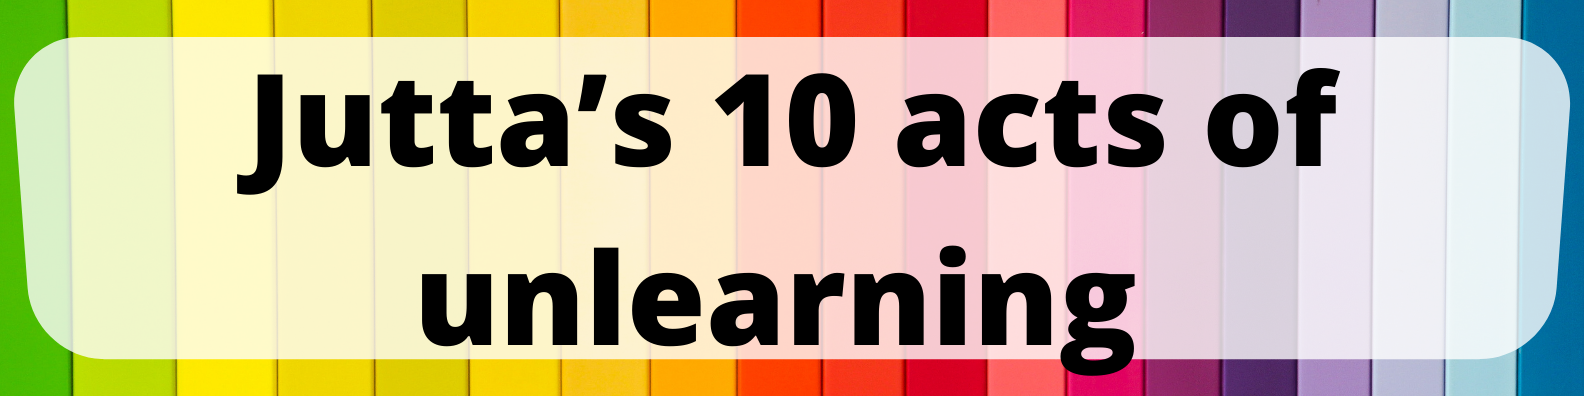 Jutta's 10 Acts of Unlearning